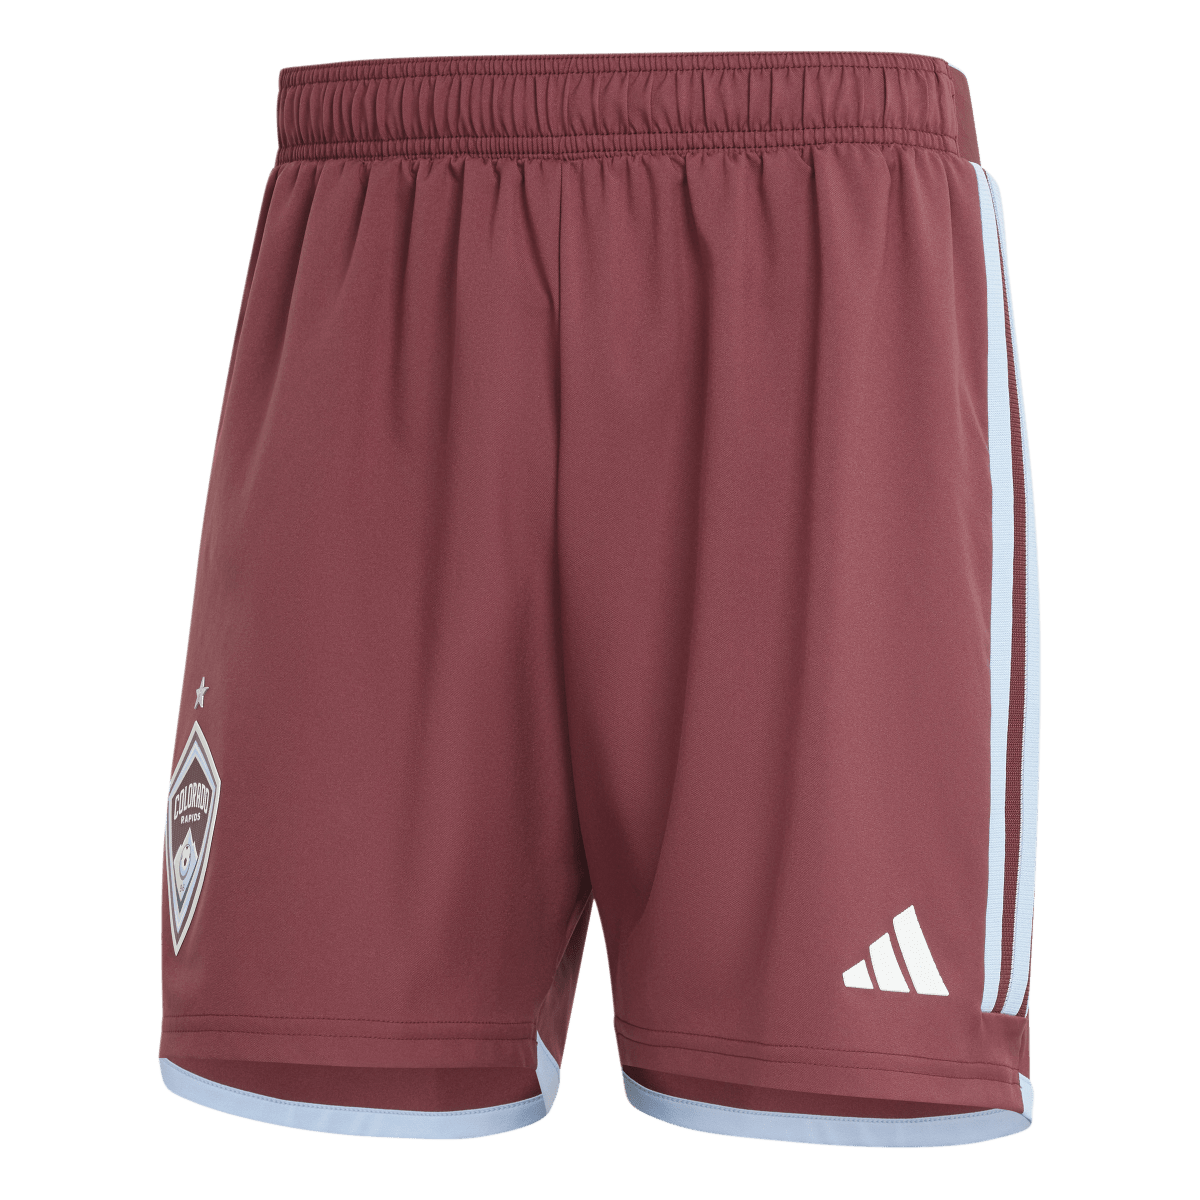 kohls adidas team issue shortsReversible Athletic ShortsKohls 